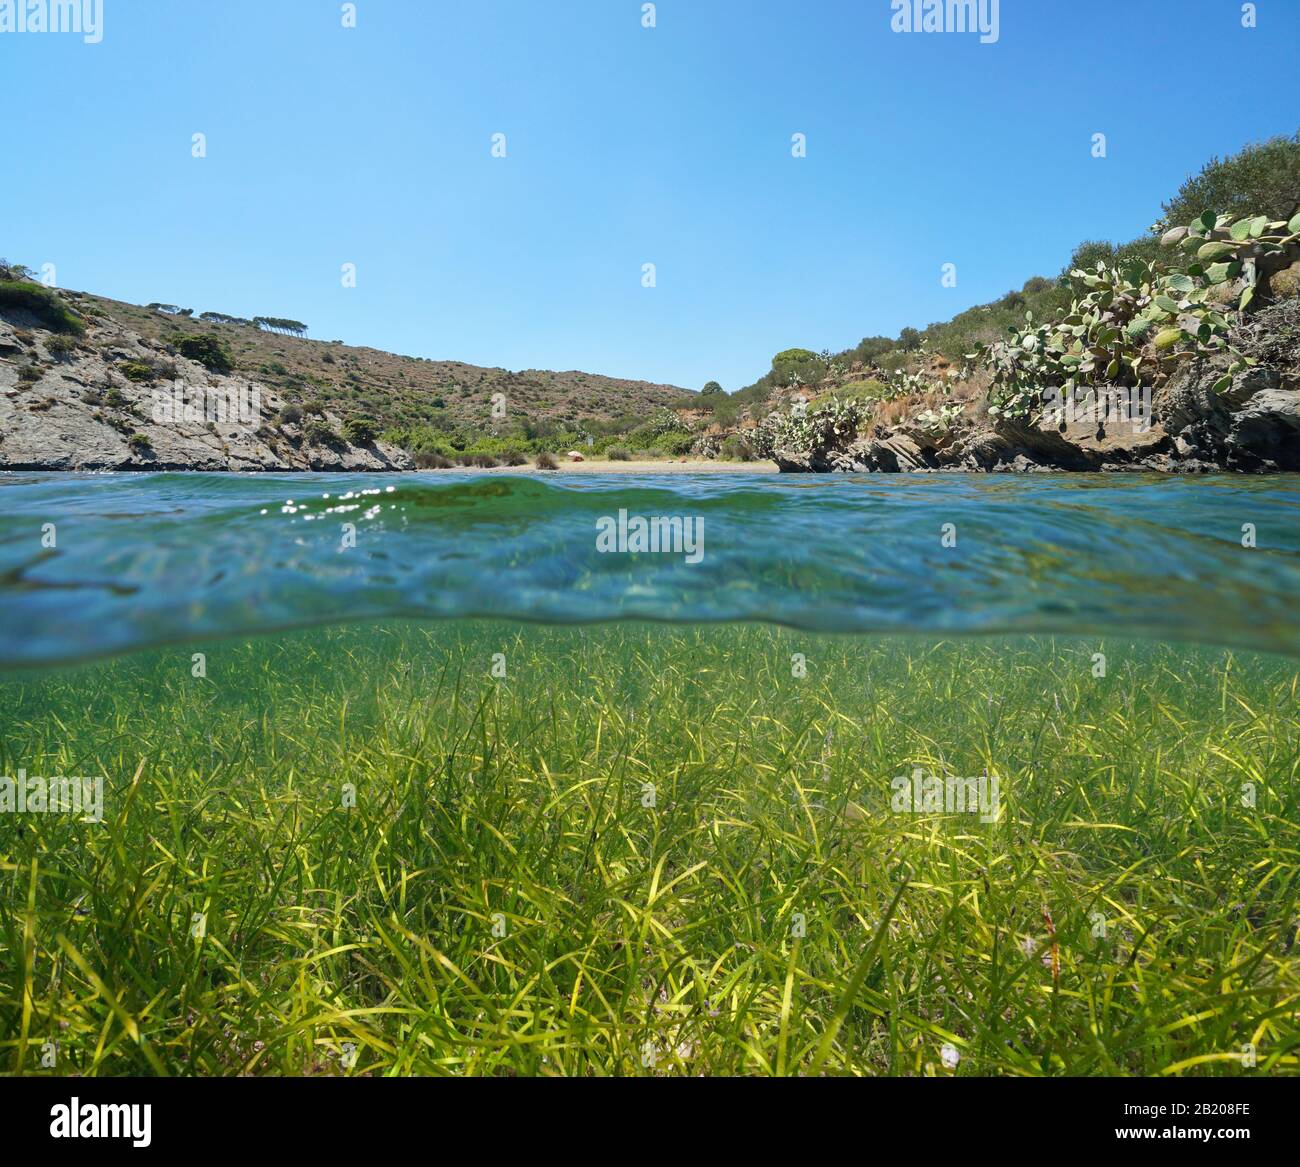 Peaceful Mediterranean cove with sea grass underwater, split view over and under water surface, Spain, Costa Brava, Cap de Creus, Cadaques Stock Photo